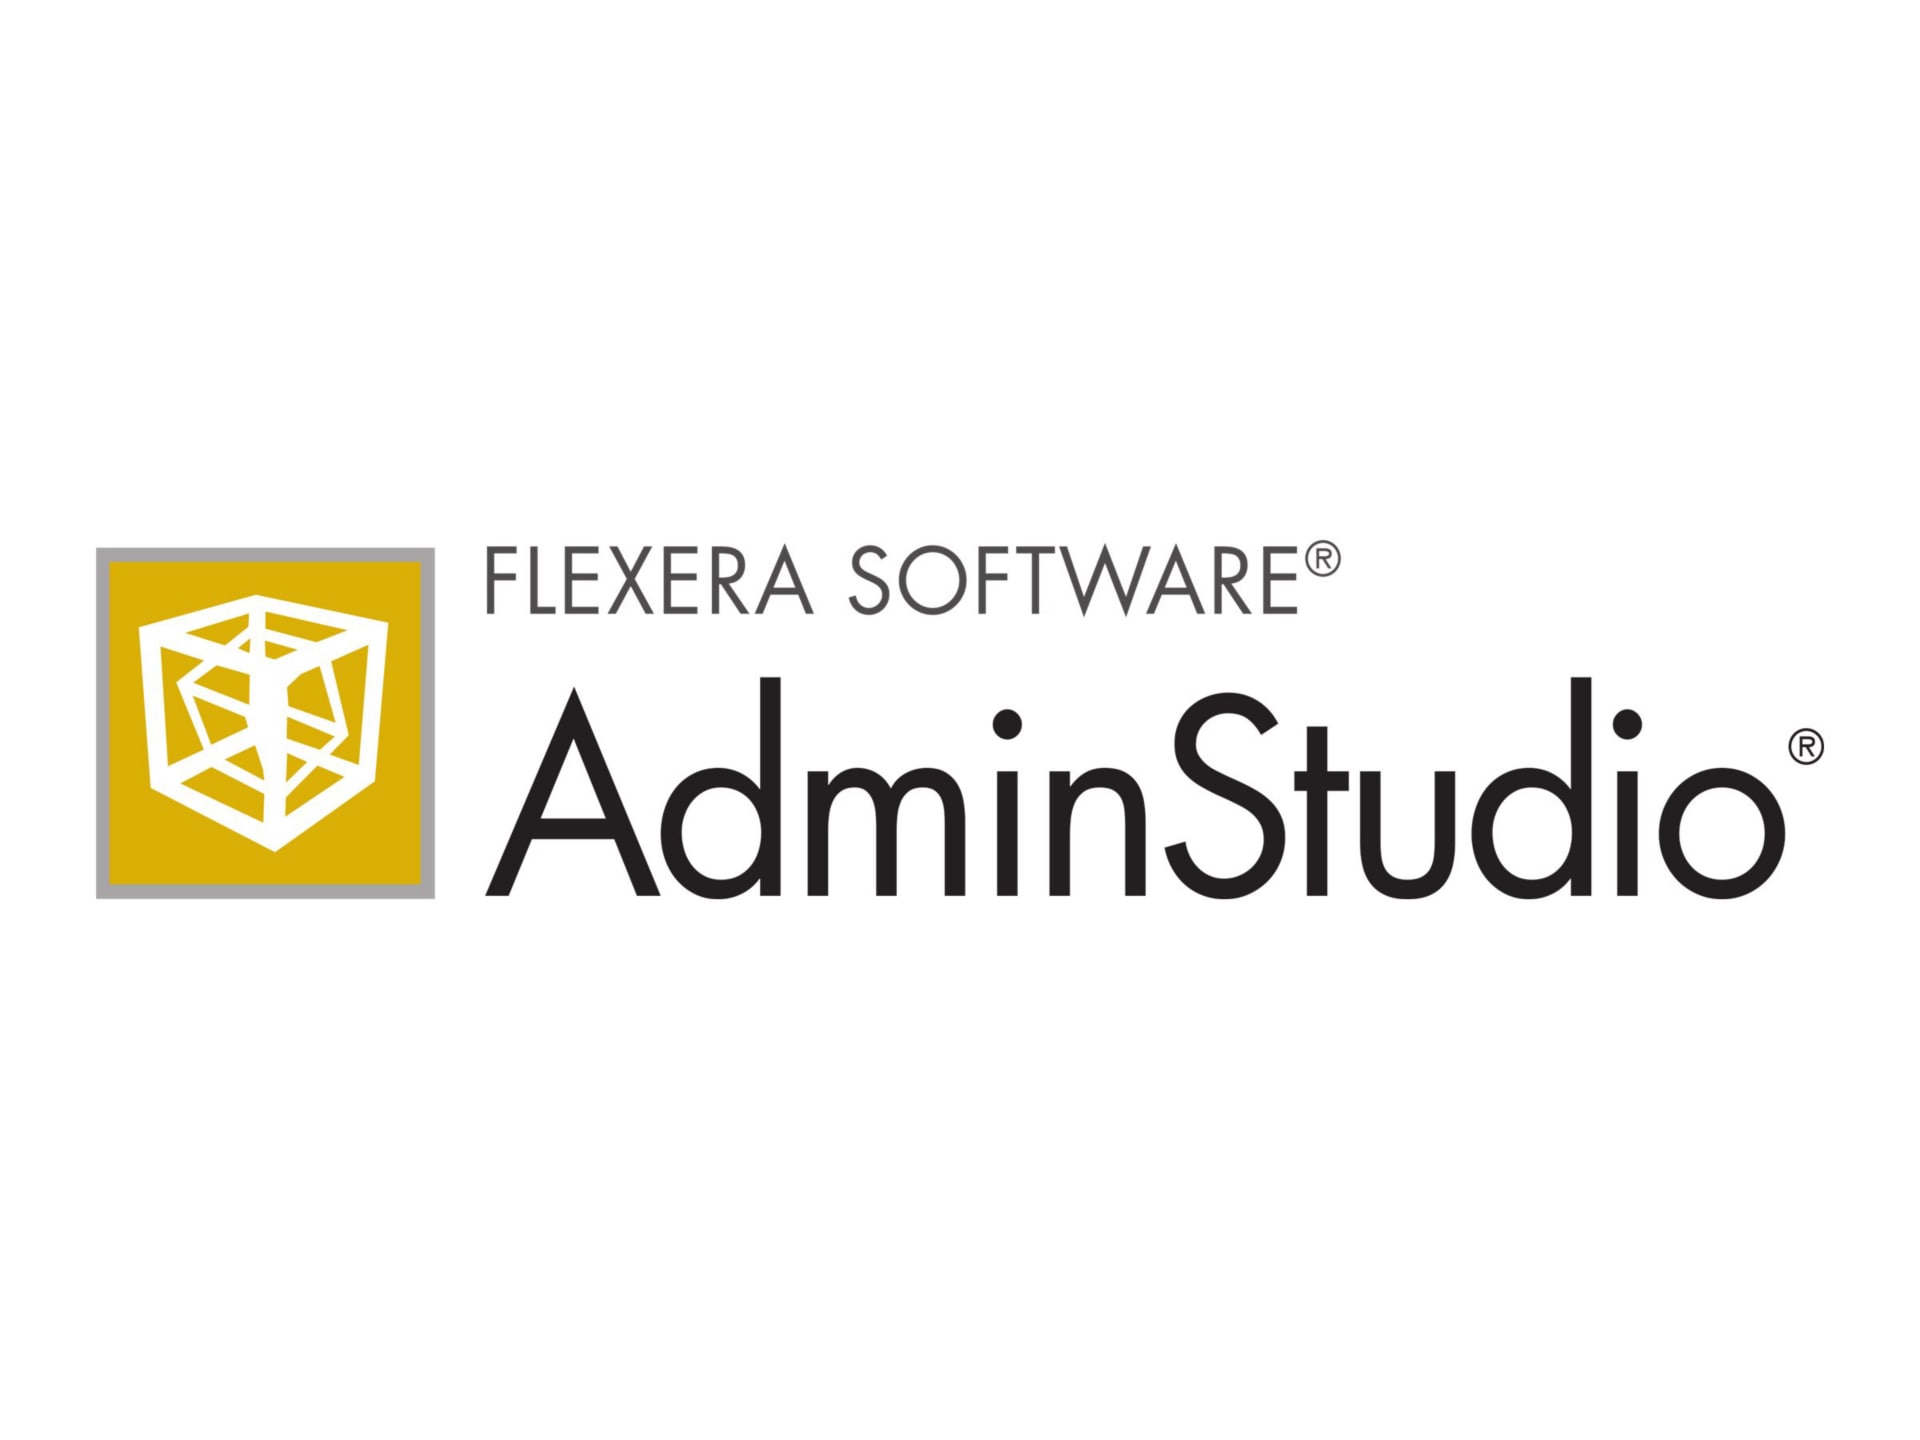 AdminStudio Enterprise Edition - subscription license (3 years) + Silver Ma